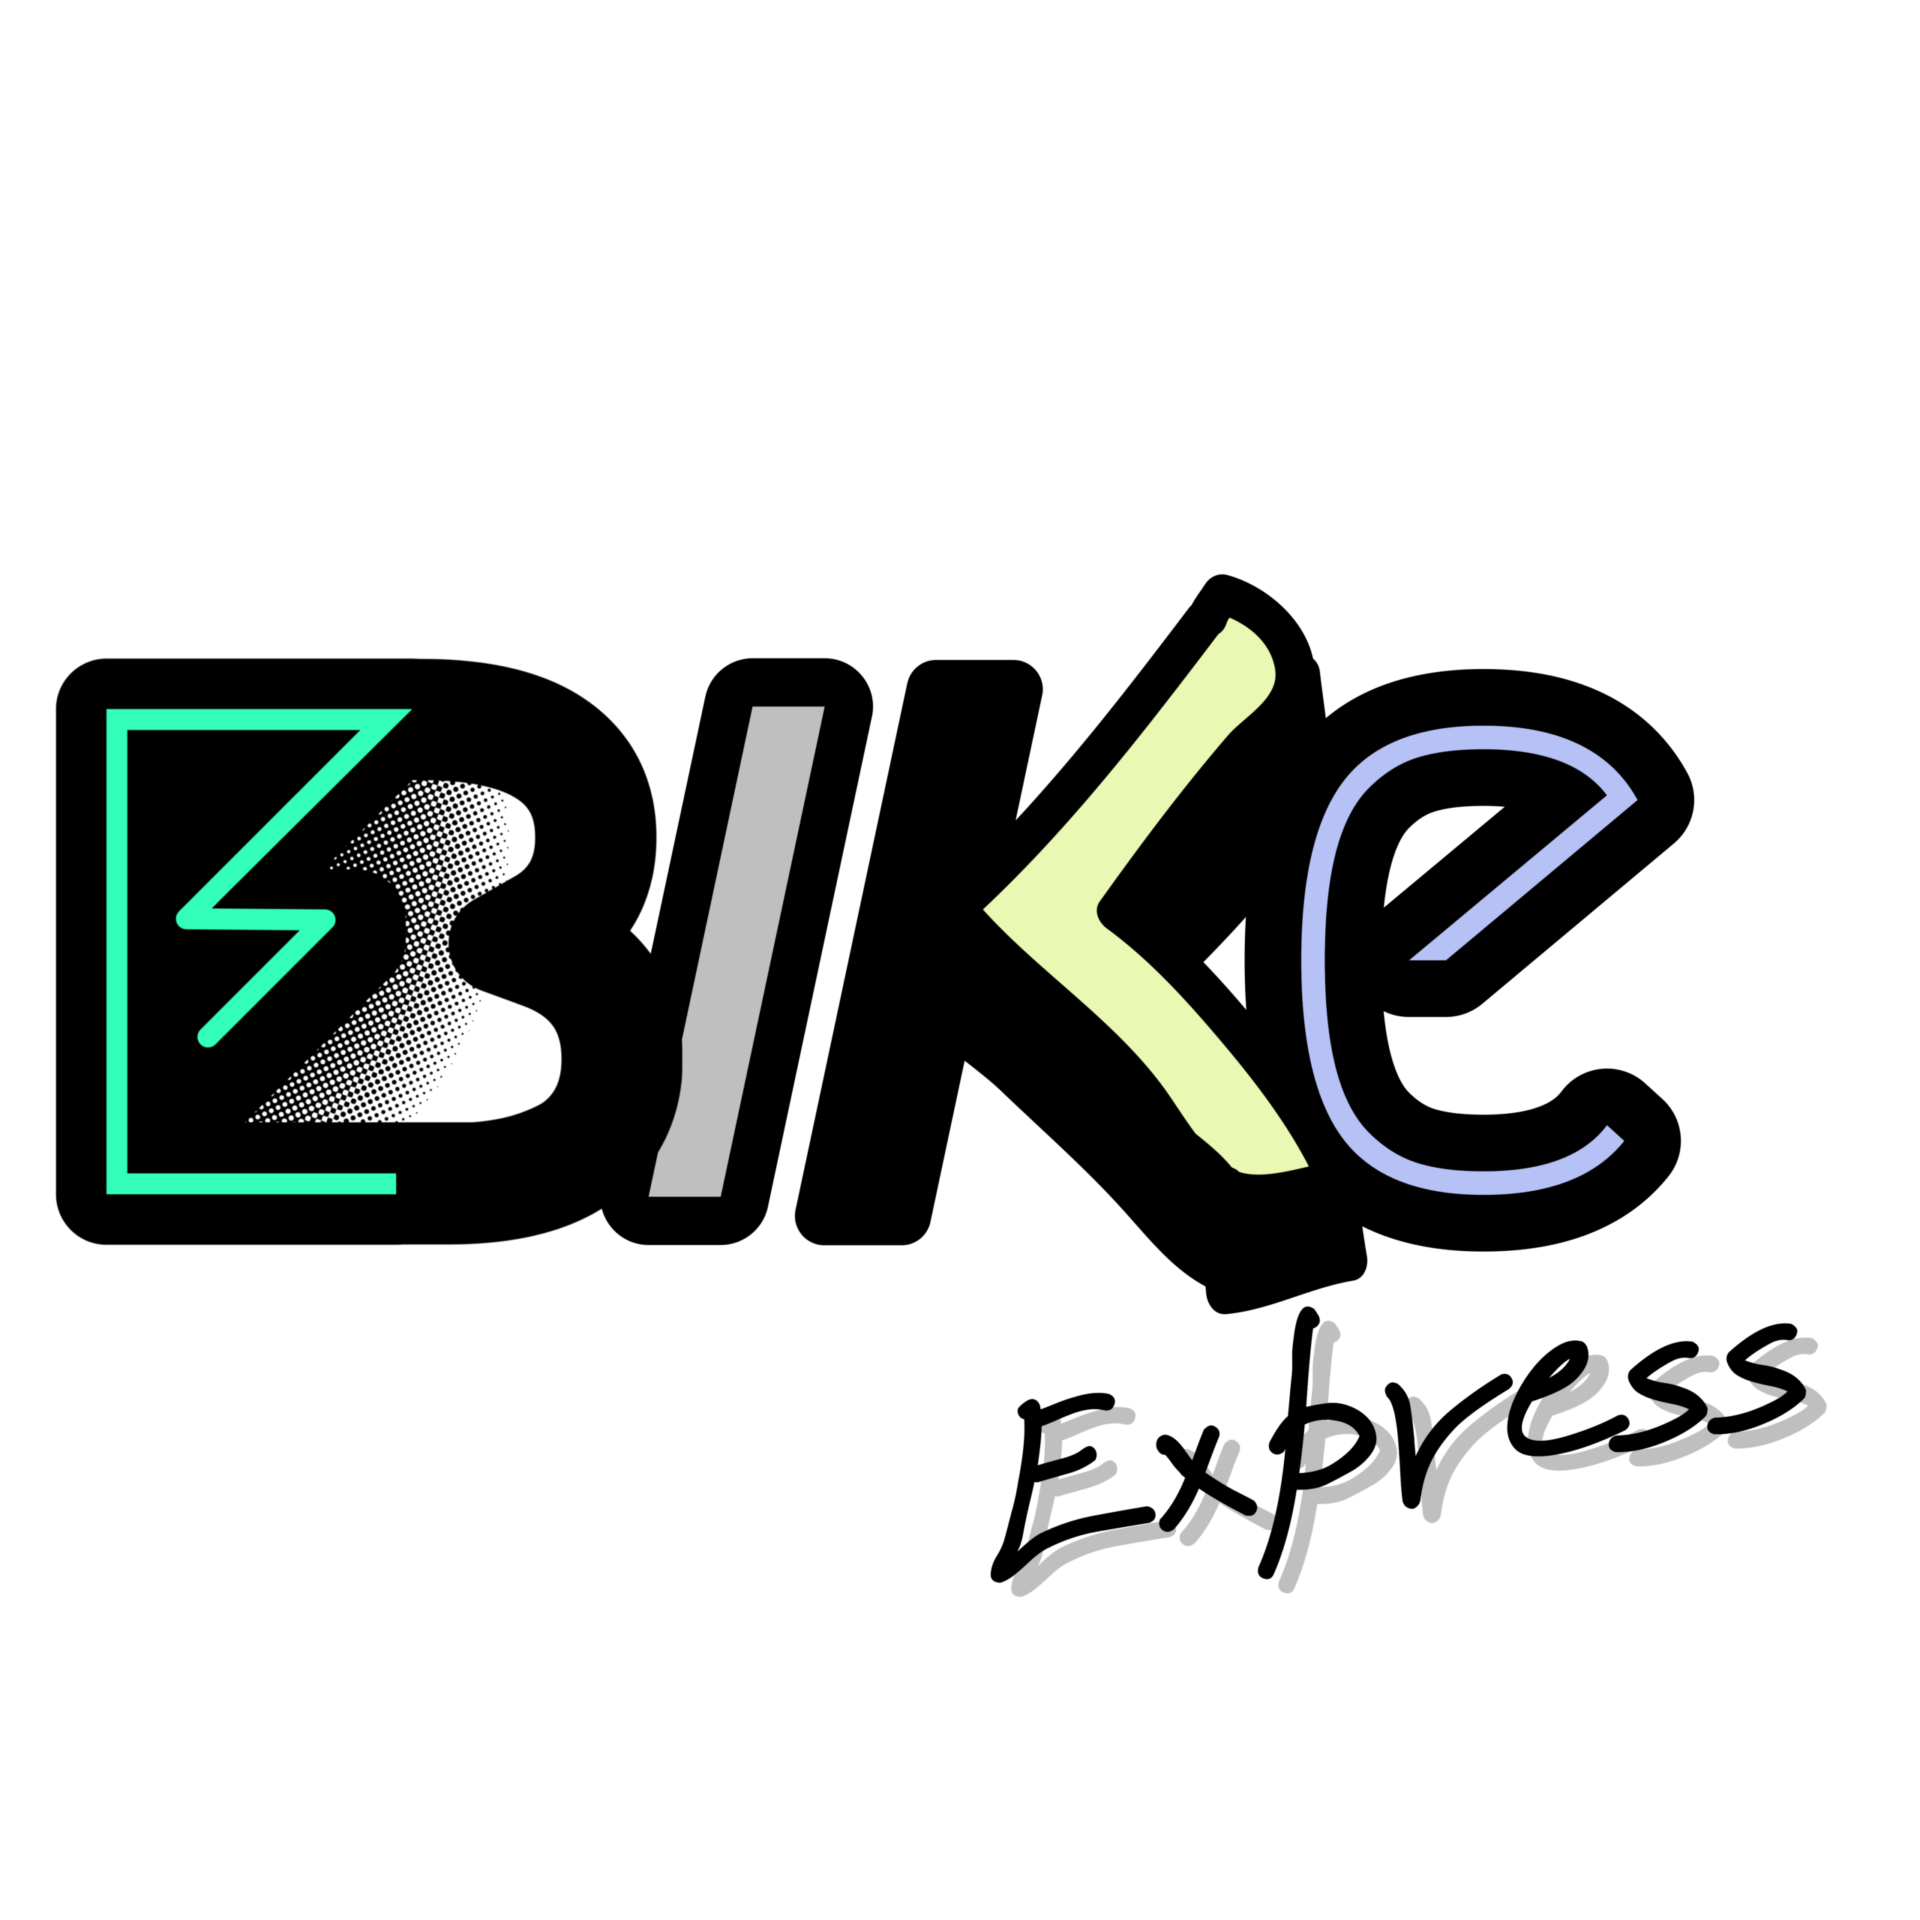 E-Bike Express